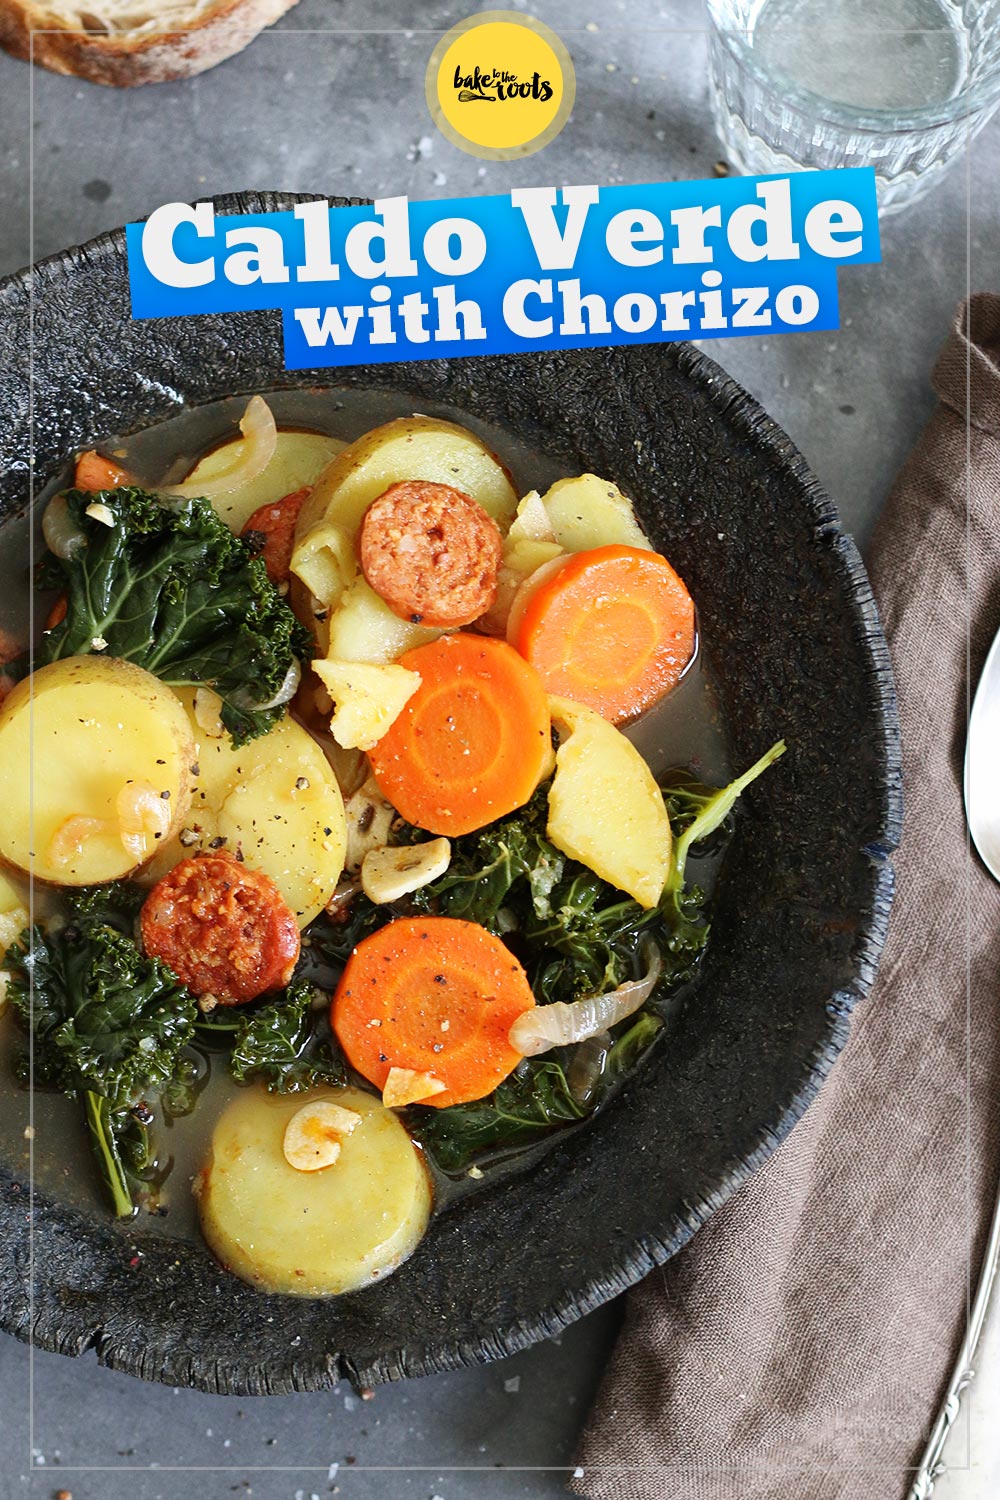 Caldo Verde with Chorizo, Potato and Kale | Bake to the roots